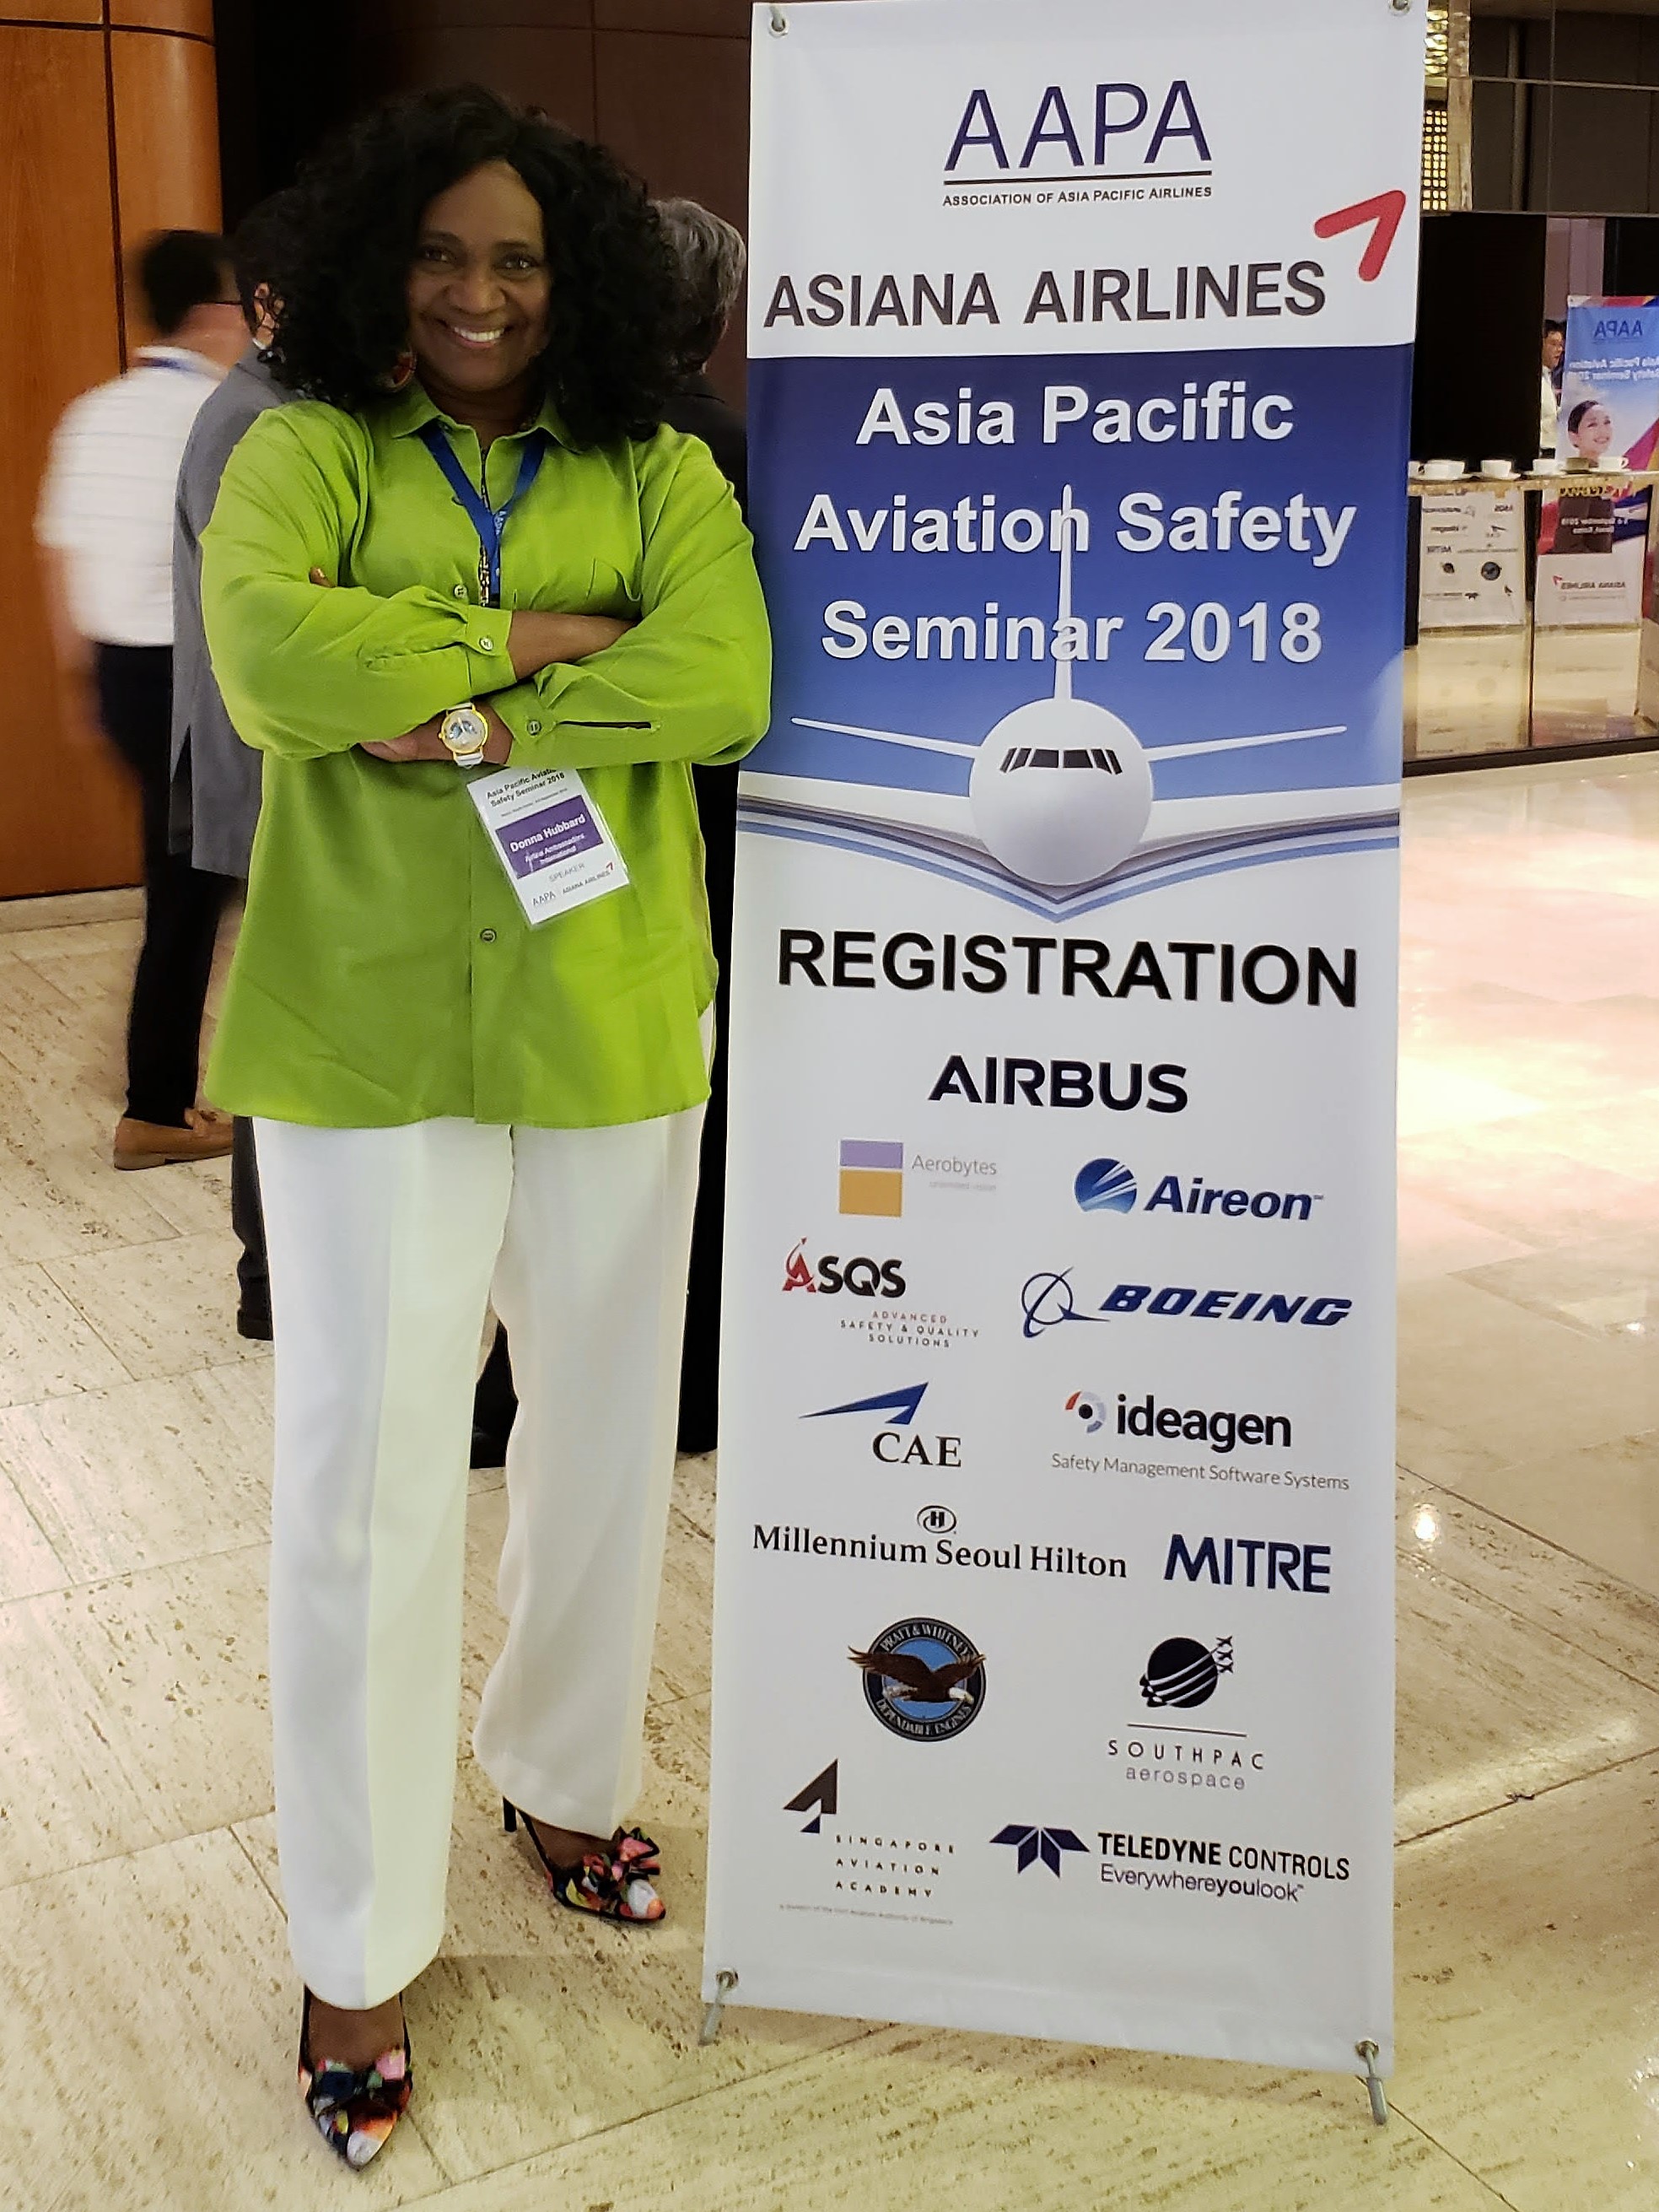 Asia Pacific Airlines - Airline AmbassadorsAirline Ambassadors